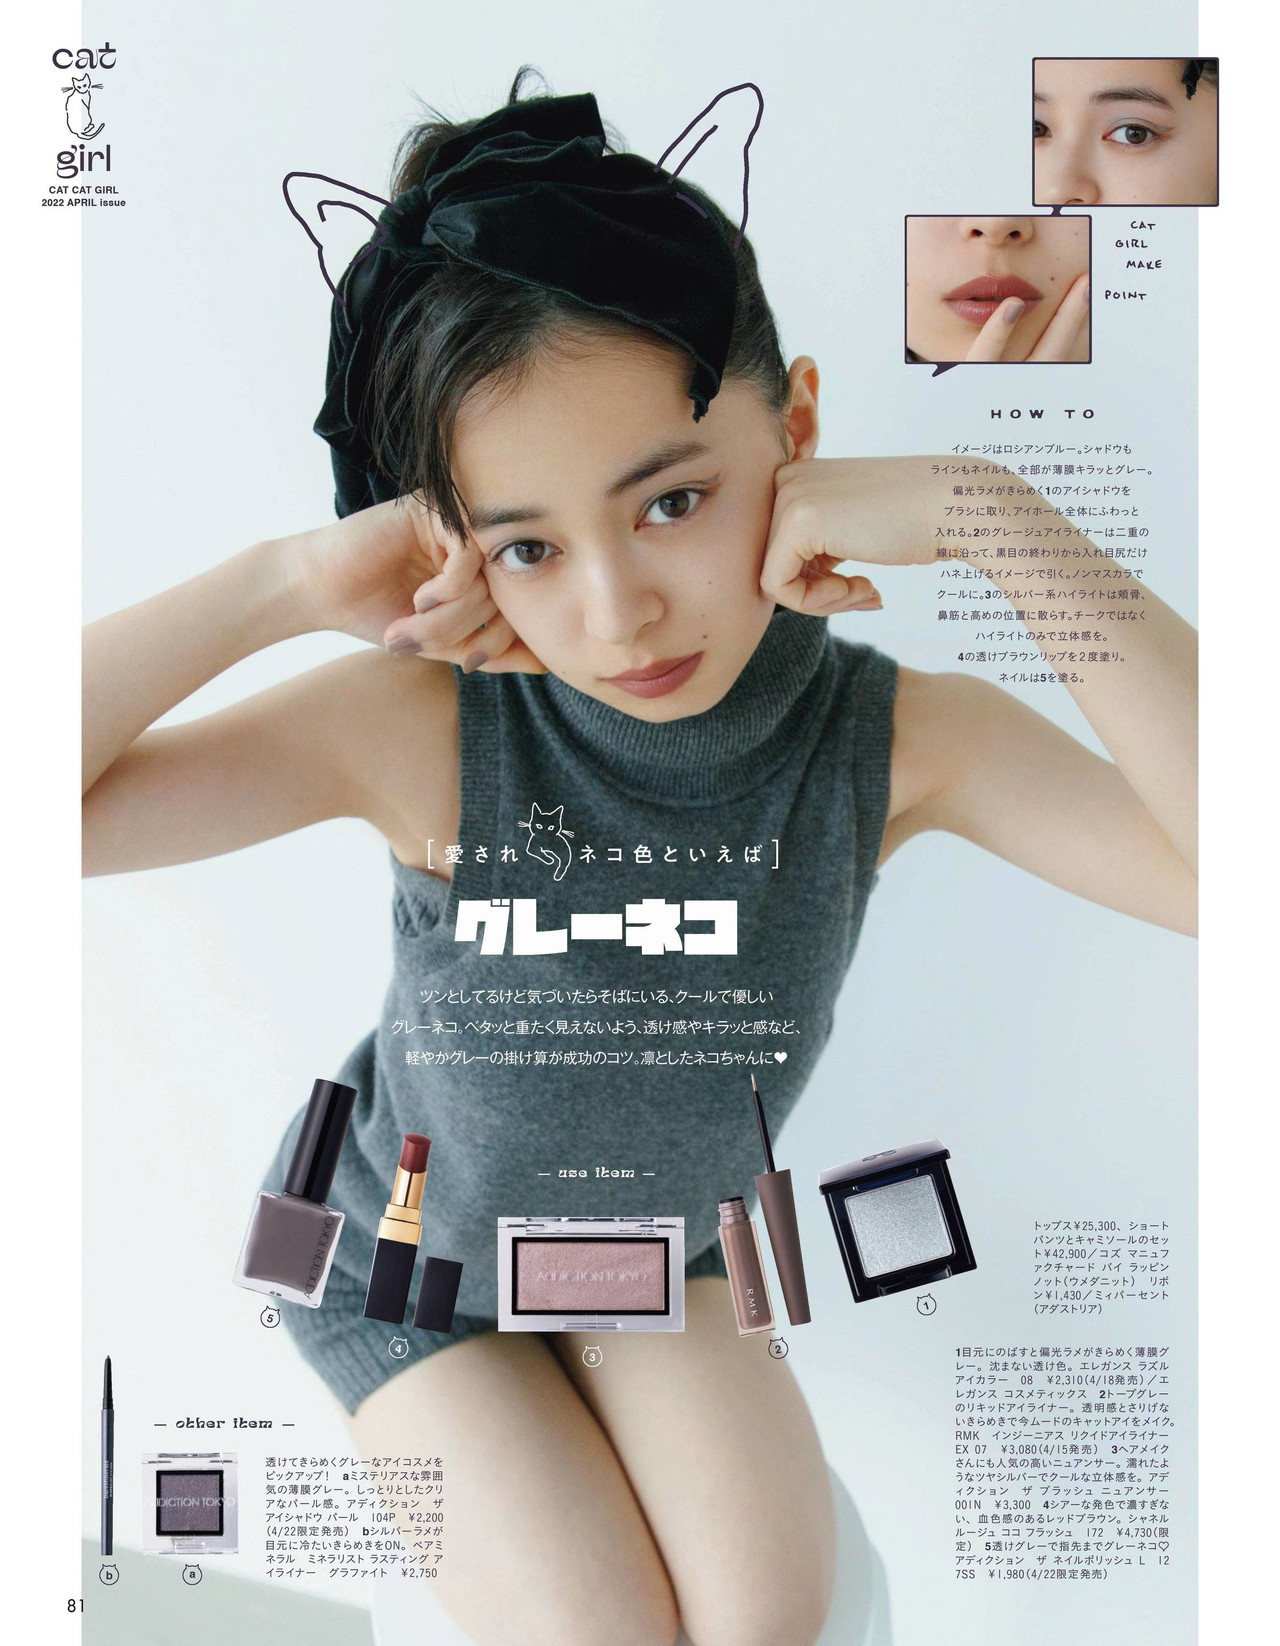 Moe Kamikokuryo 上國料萌衣, aR (アール) Magazine 2022.04